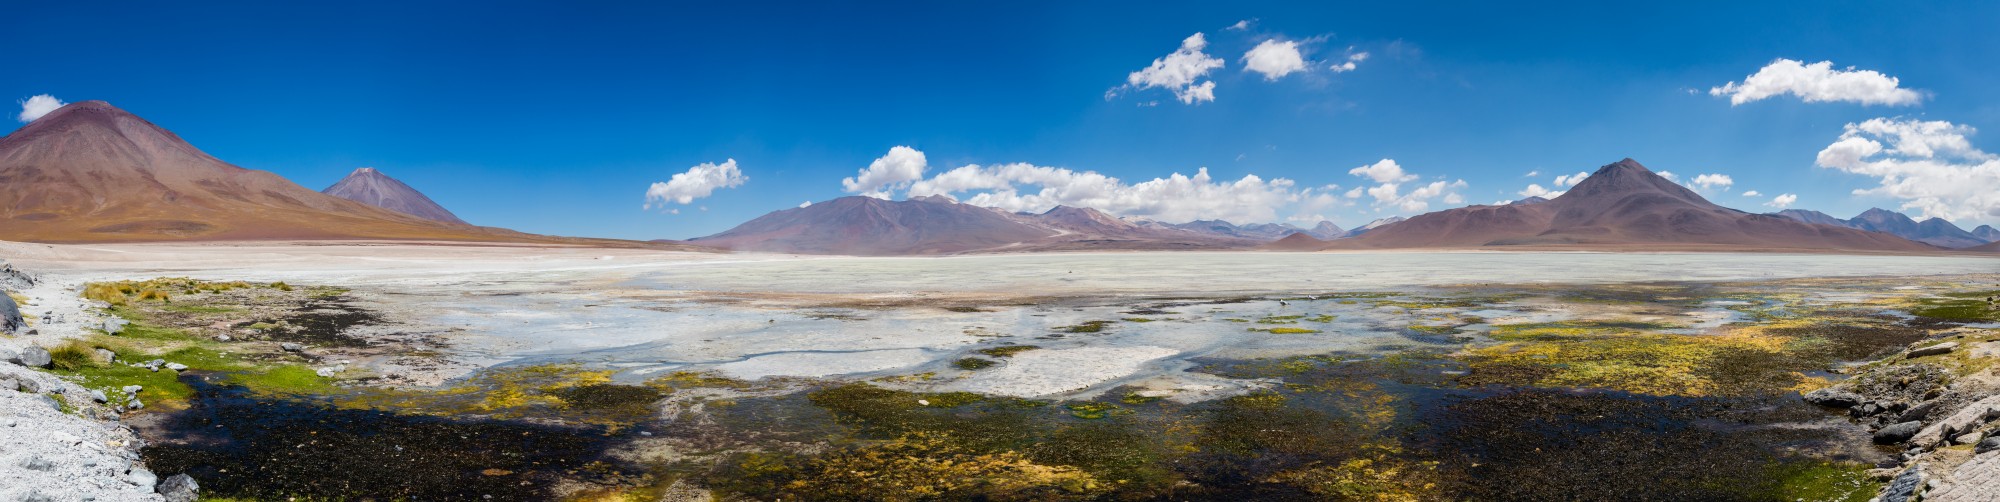 Laguna Blanca, Bolivia, 2016-02-02, DD 25-29 PAN